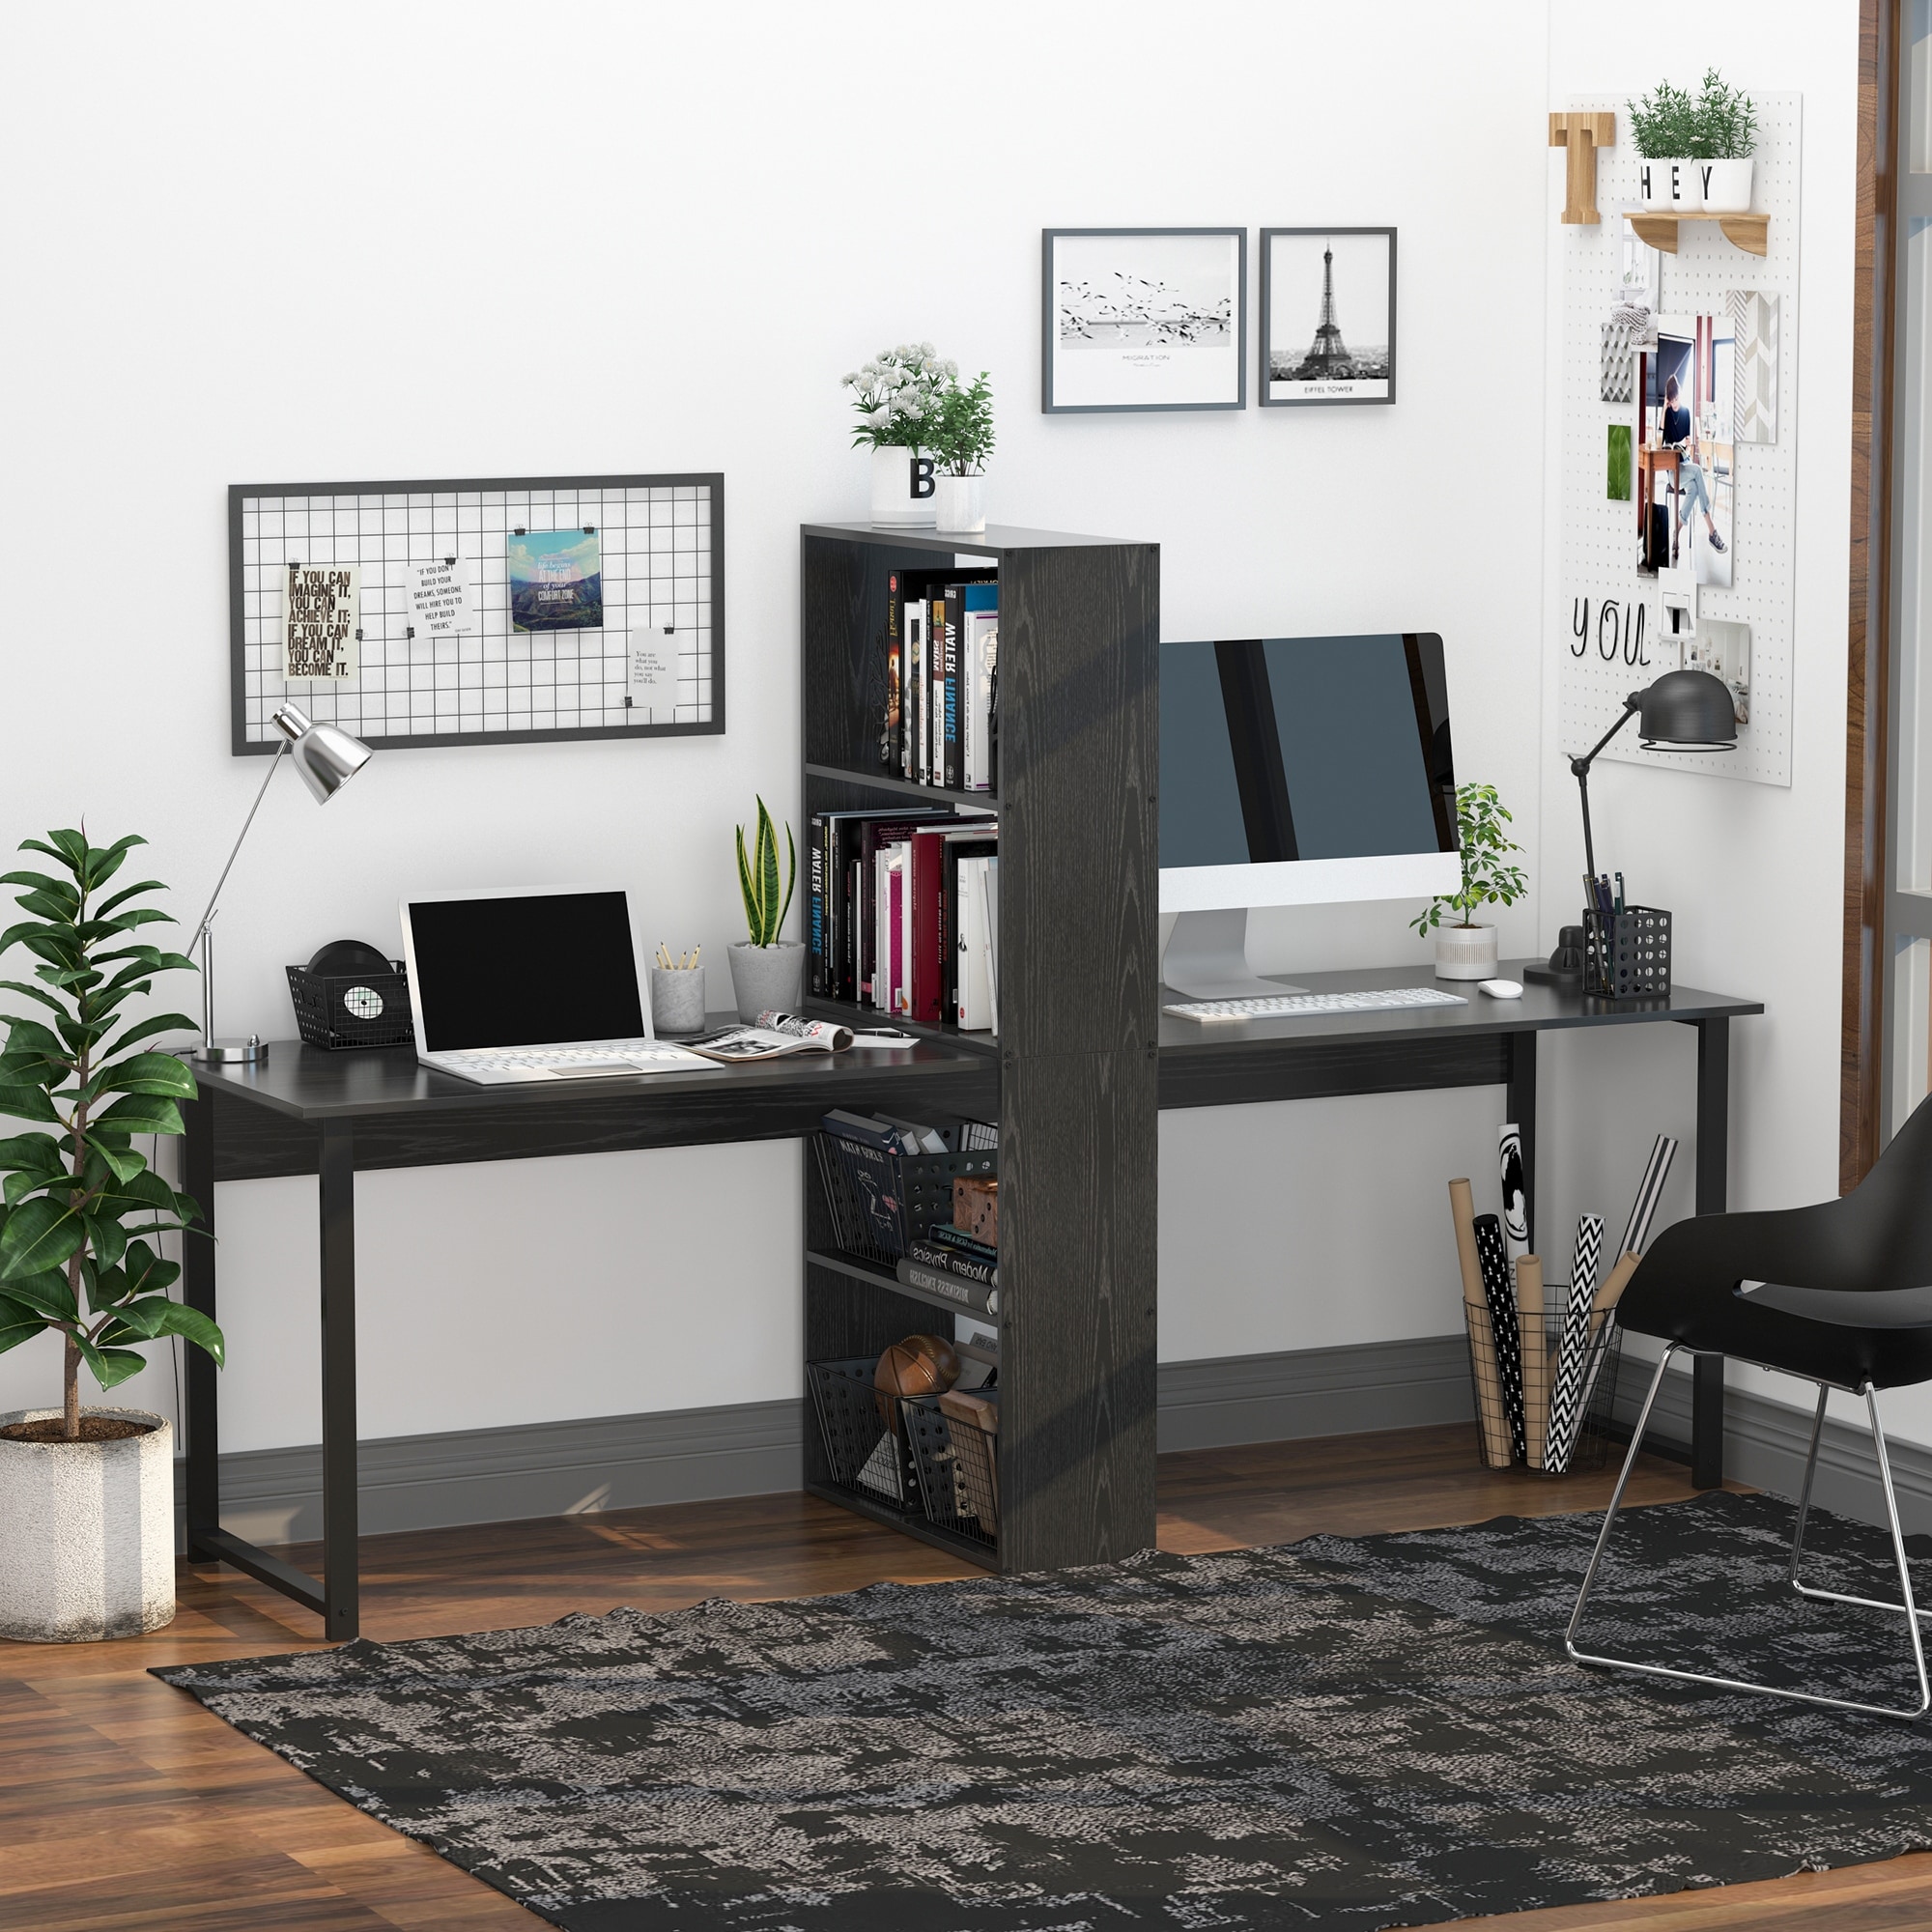 Ergonomic computer desk, workplace, and workstation. Stick figure